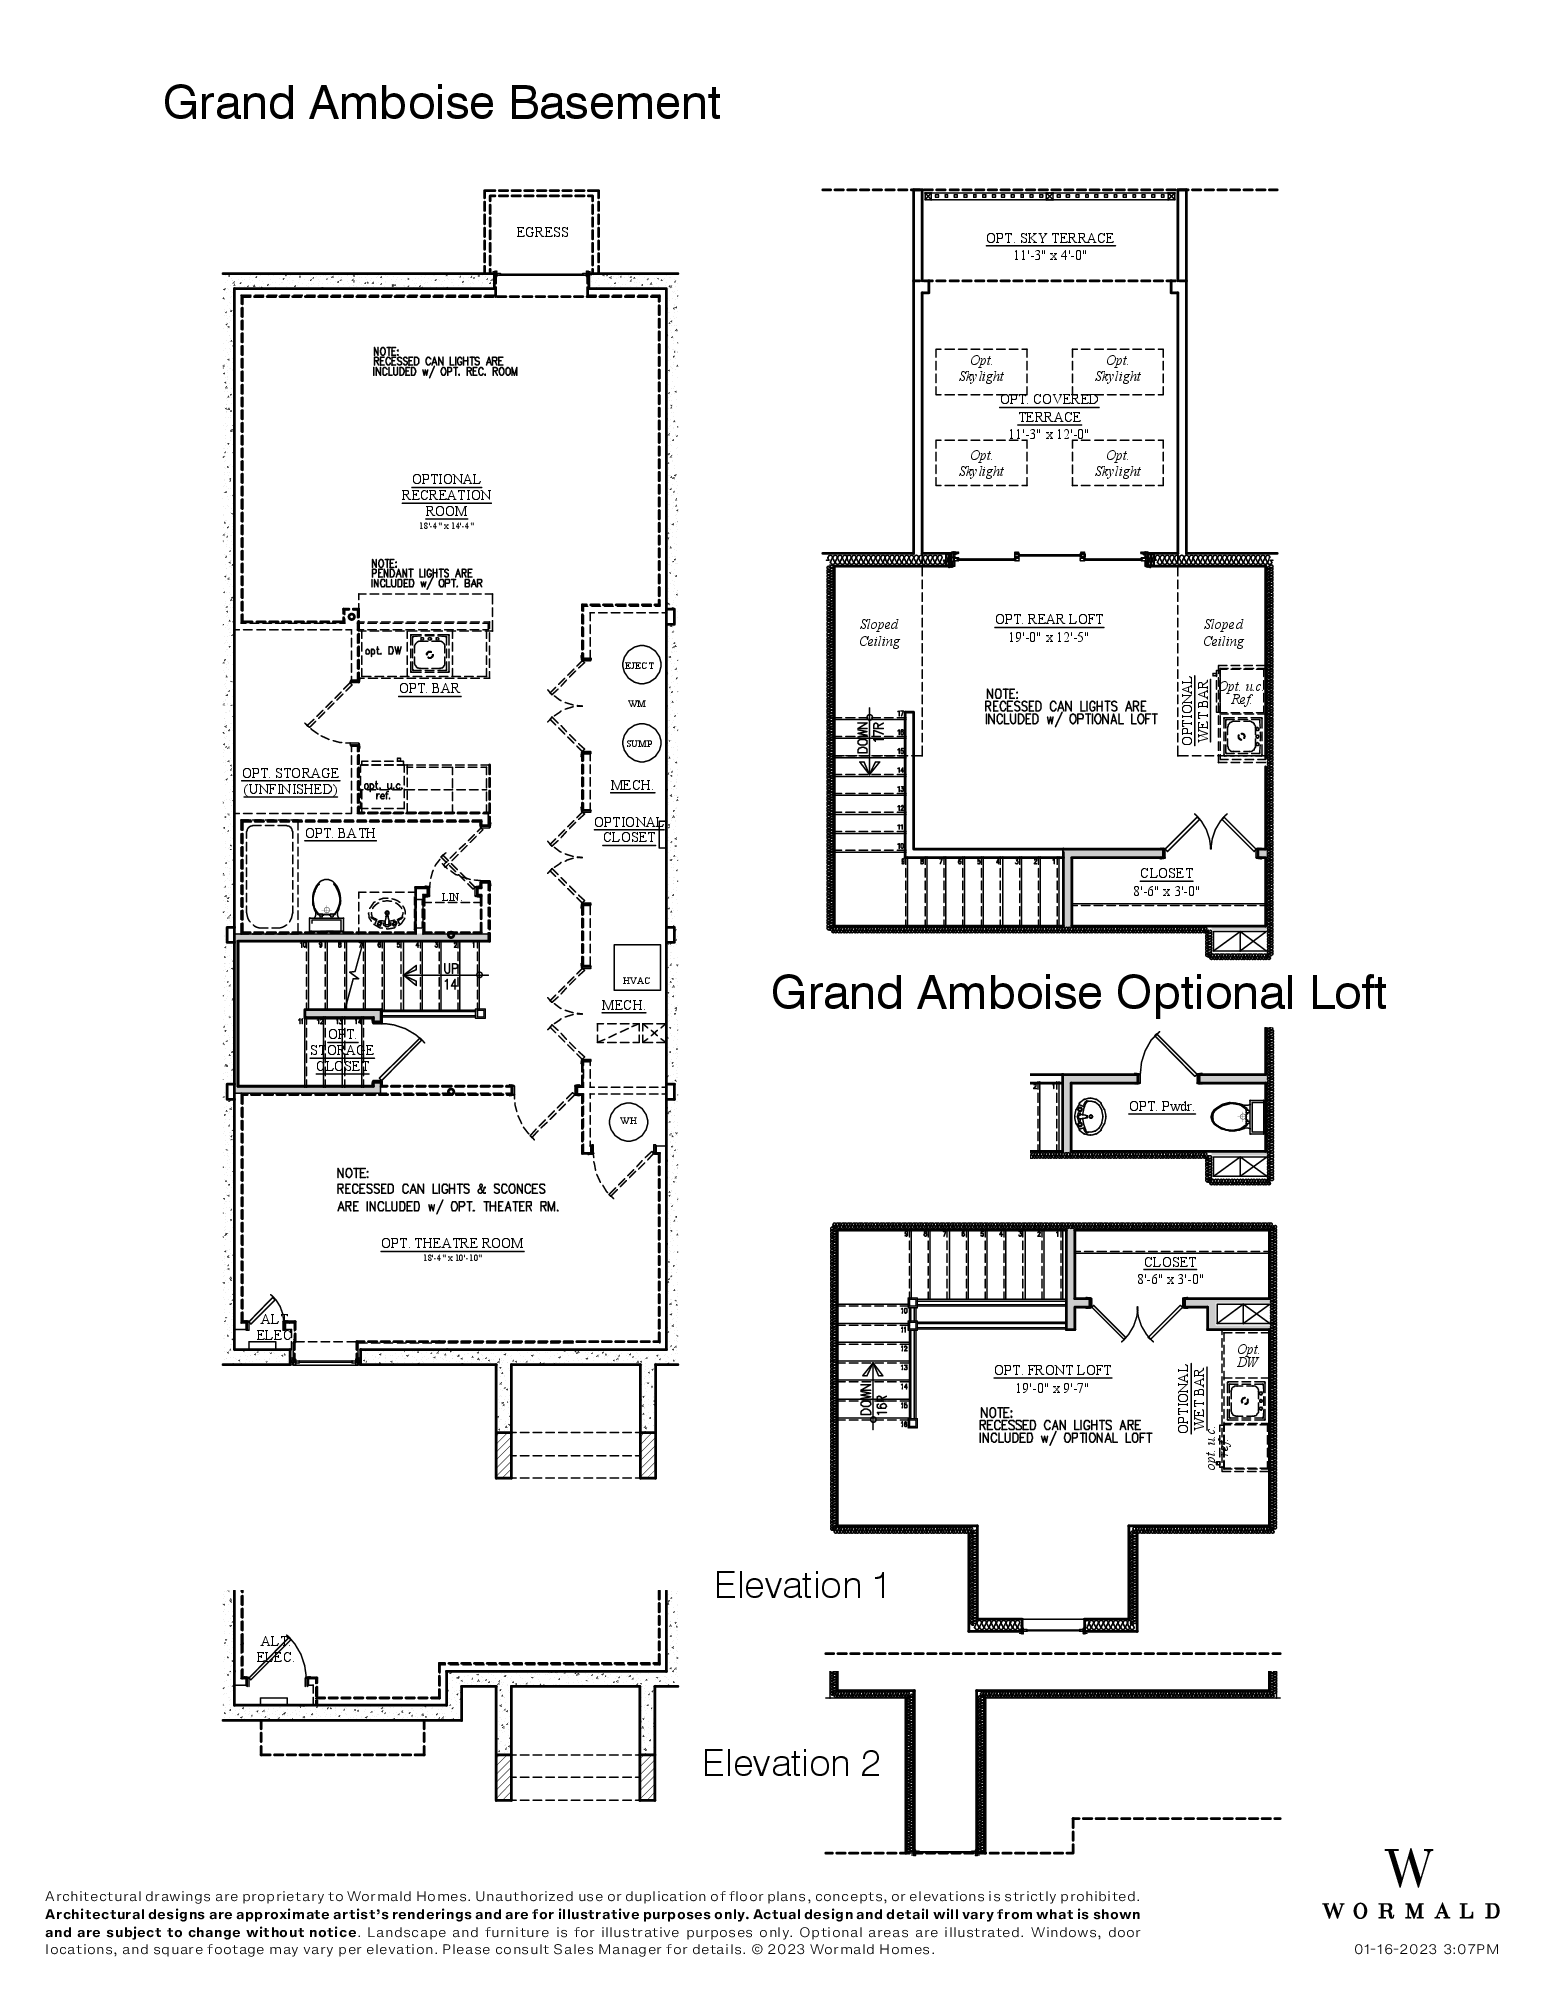 The Grand Amboise floor plan 2